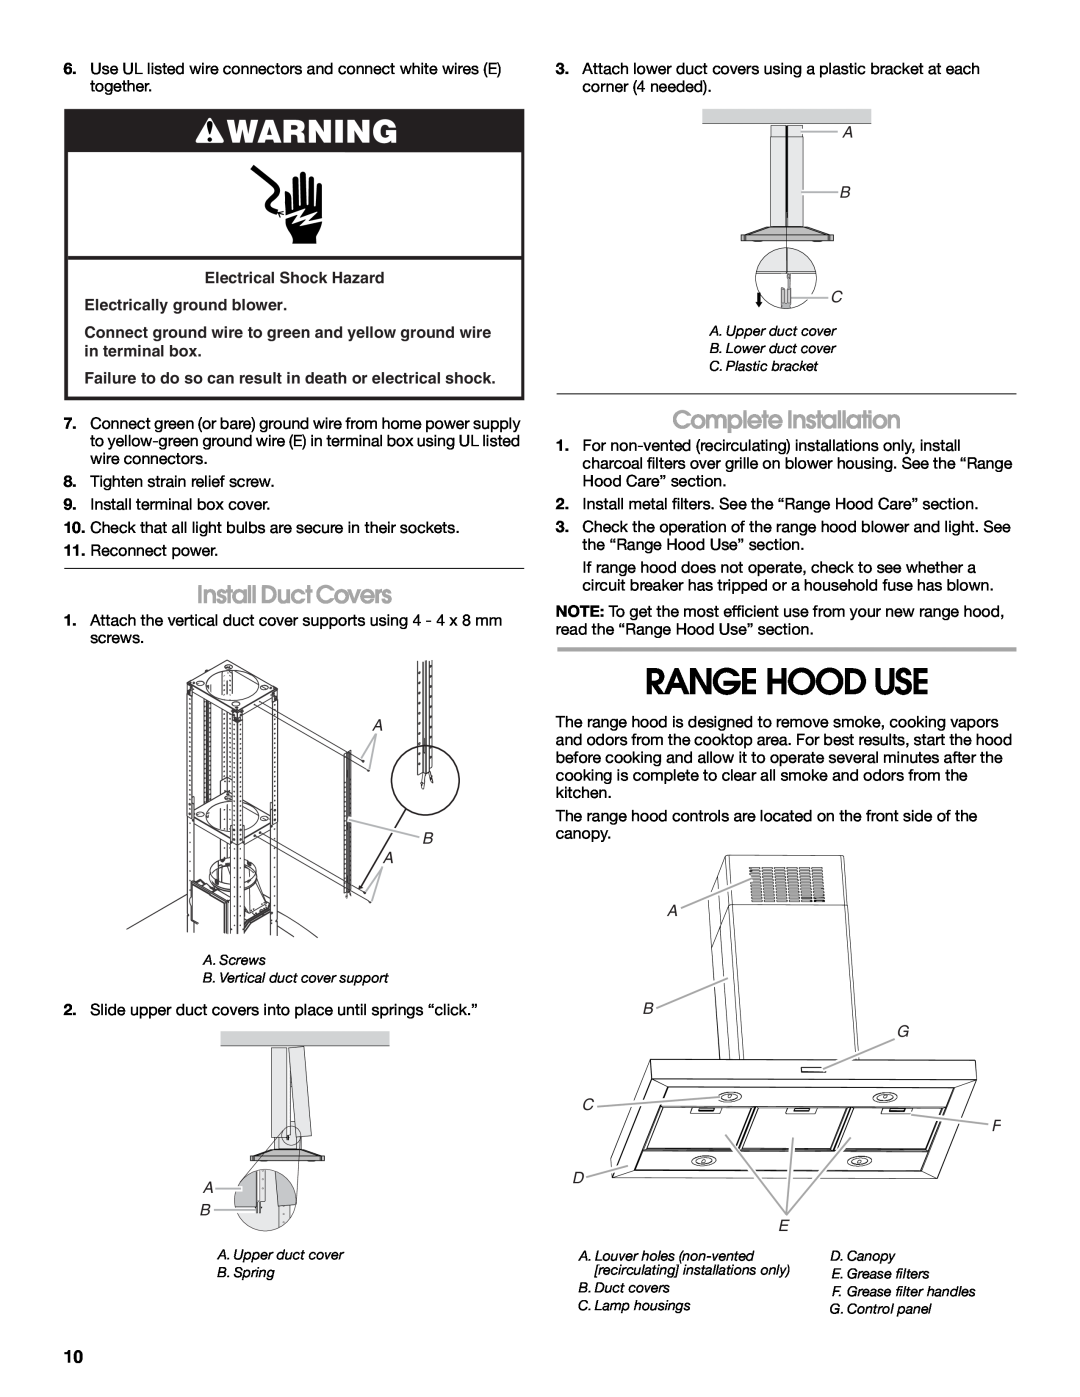 Jenn-Air W10272061, W10274319E Range Hood Use, Install Duct Covers, Complete Installation, A B C, A B A 